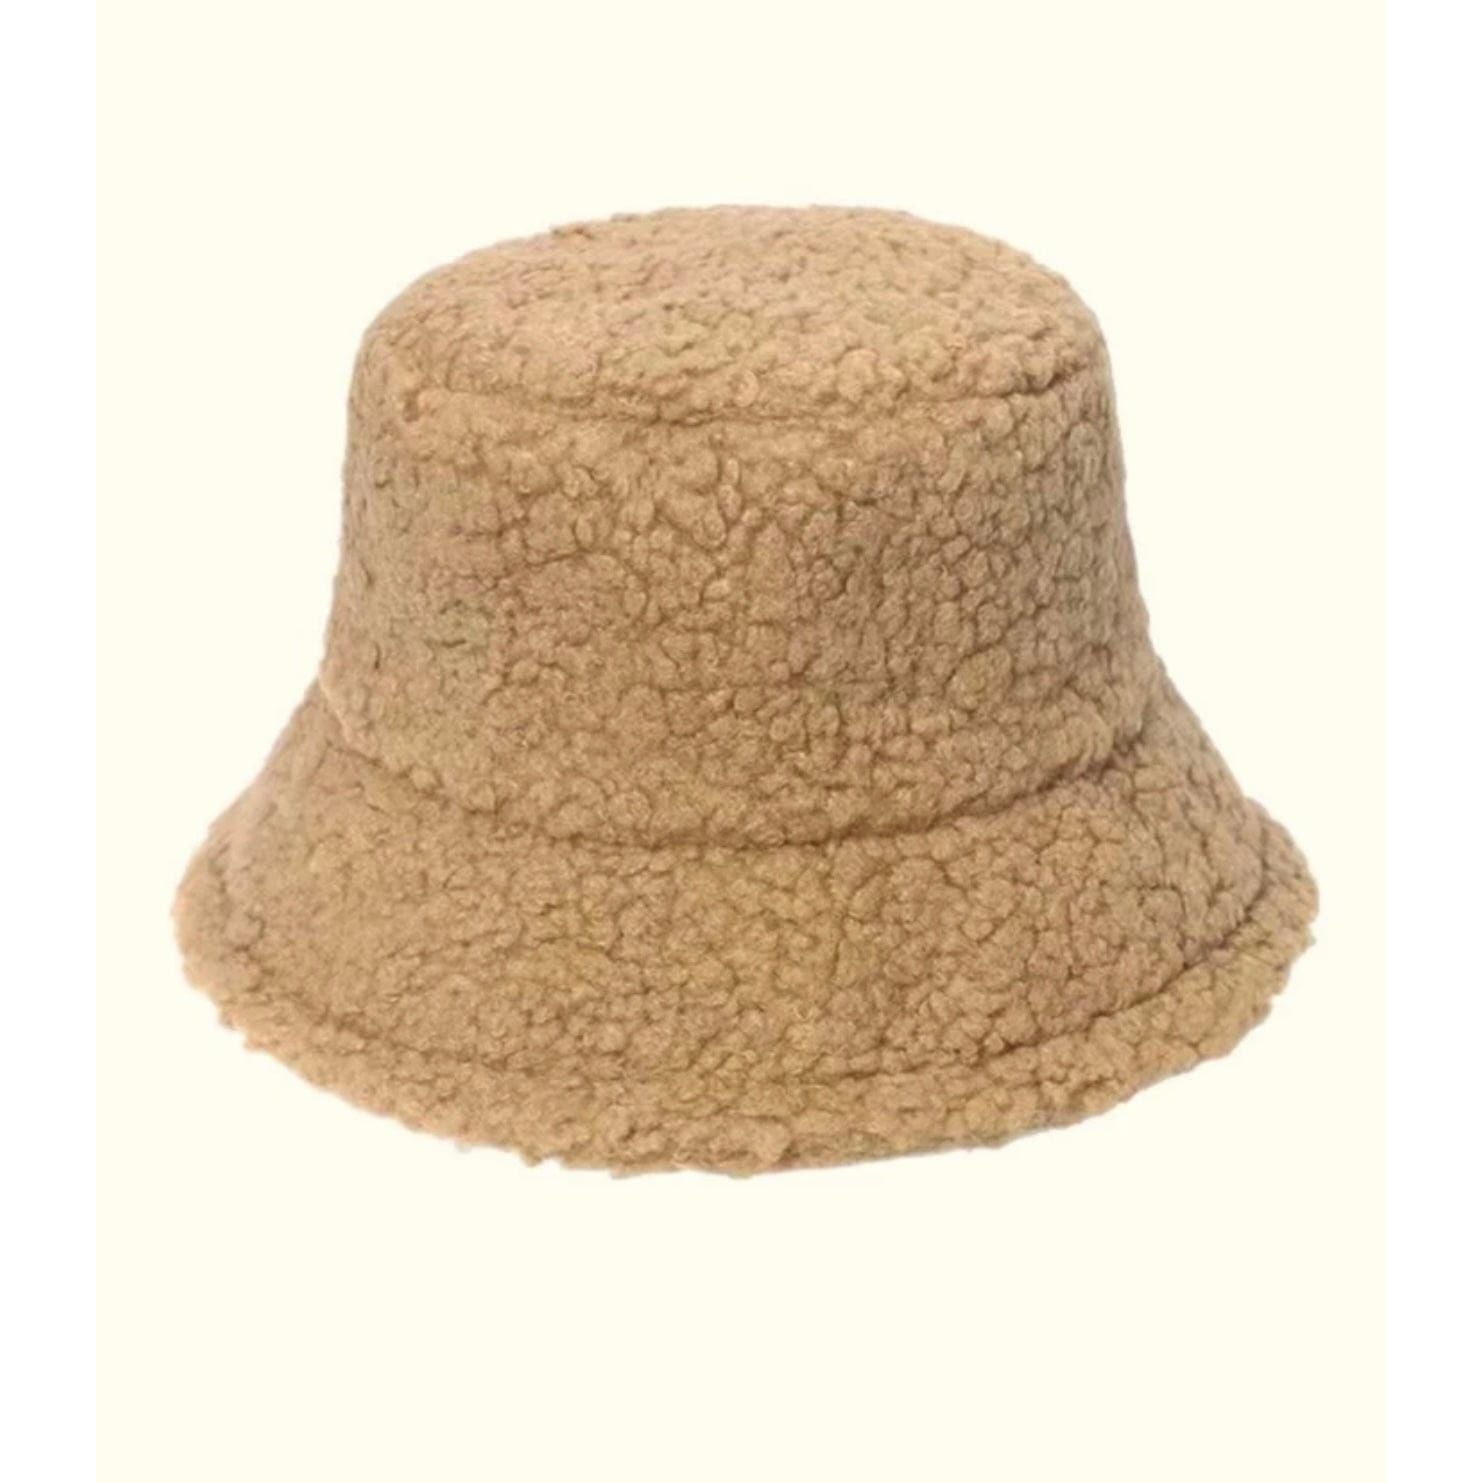 Tan Fuzzy Hat